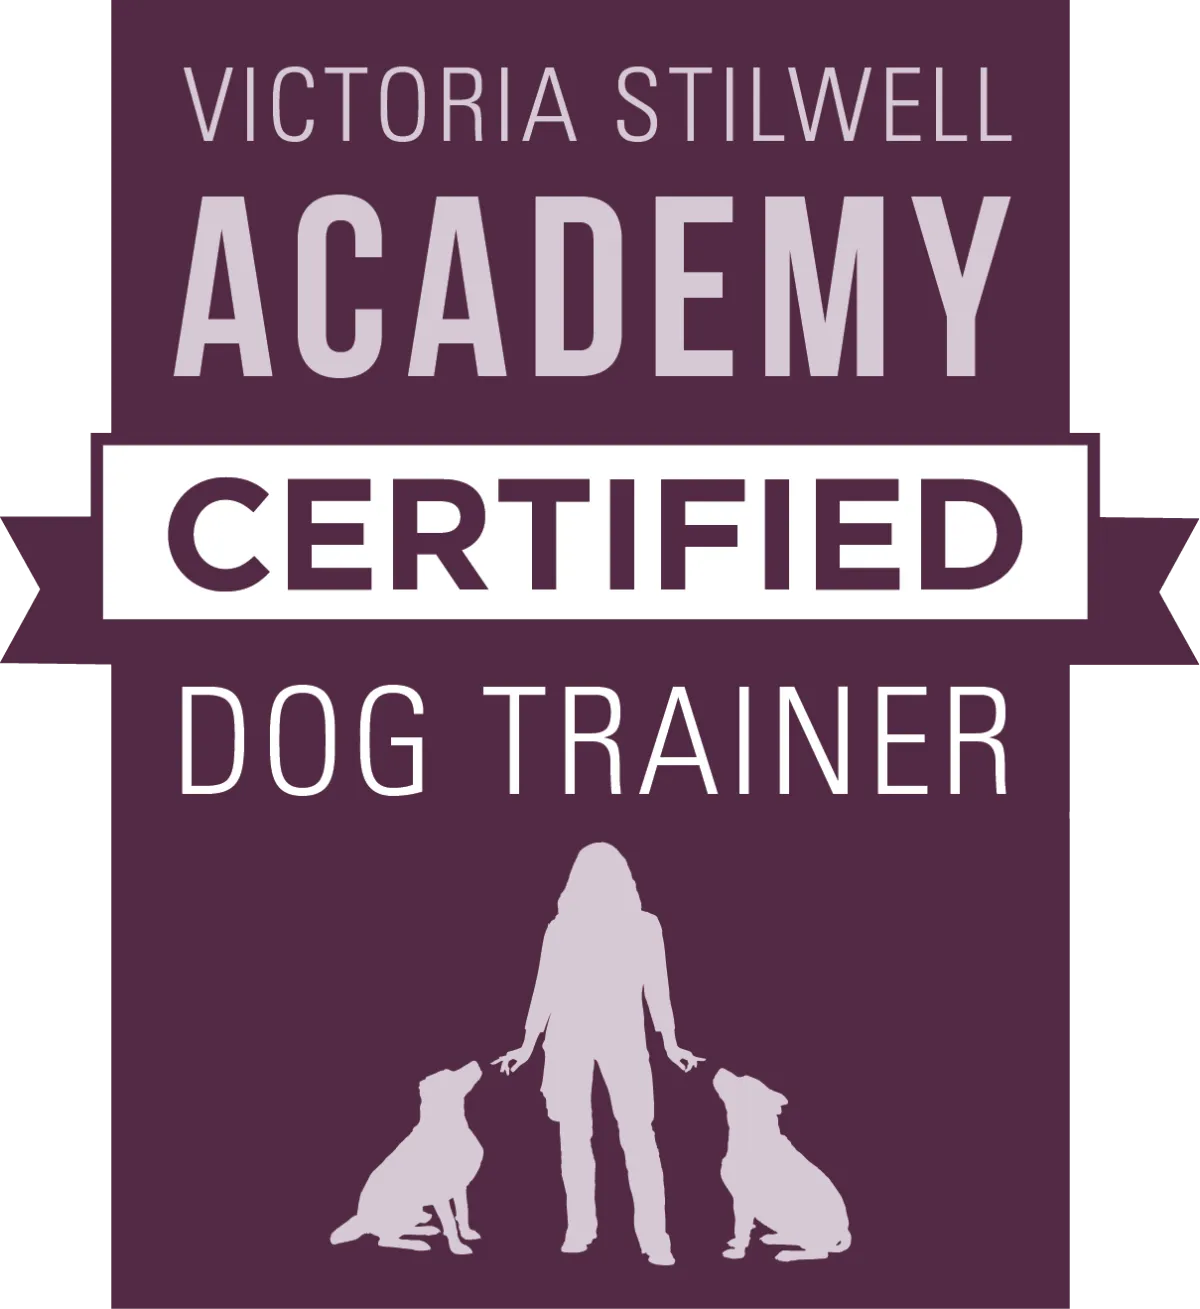 Vitoria Stilwell Academy for Dog Training & Behavior certification badge